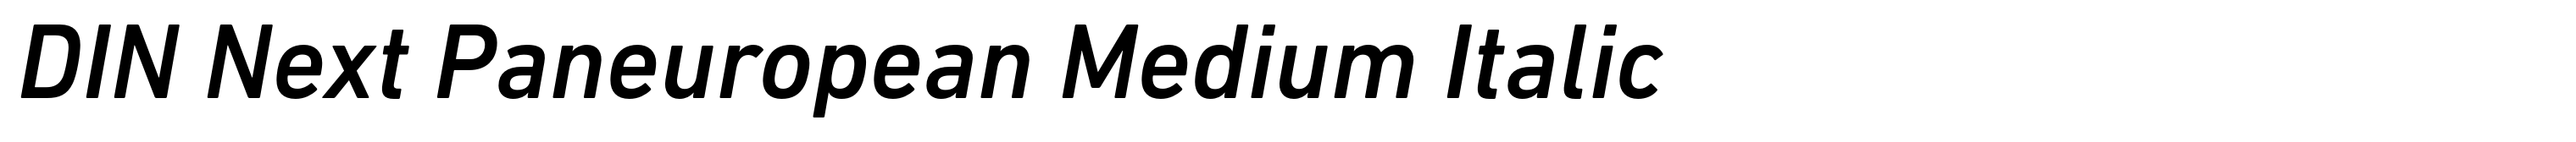 DIN Next Paneuropean Medium Italic